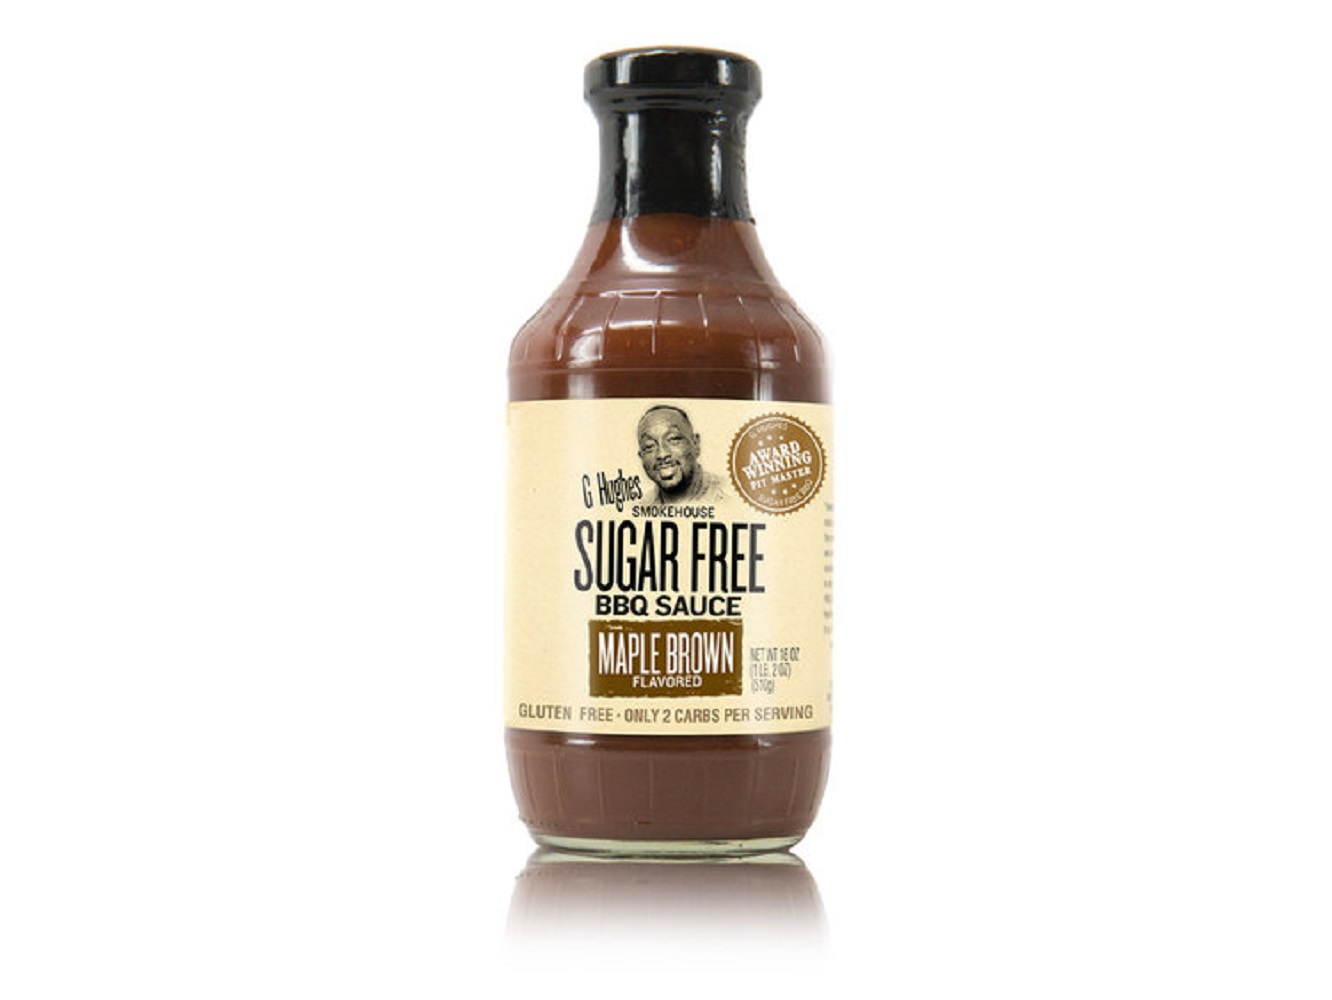 Smokehouse Sugar Free Bbq Sauce, Maple Brown - 100